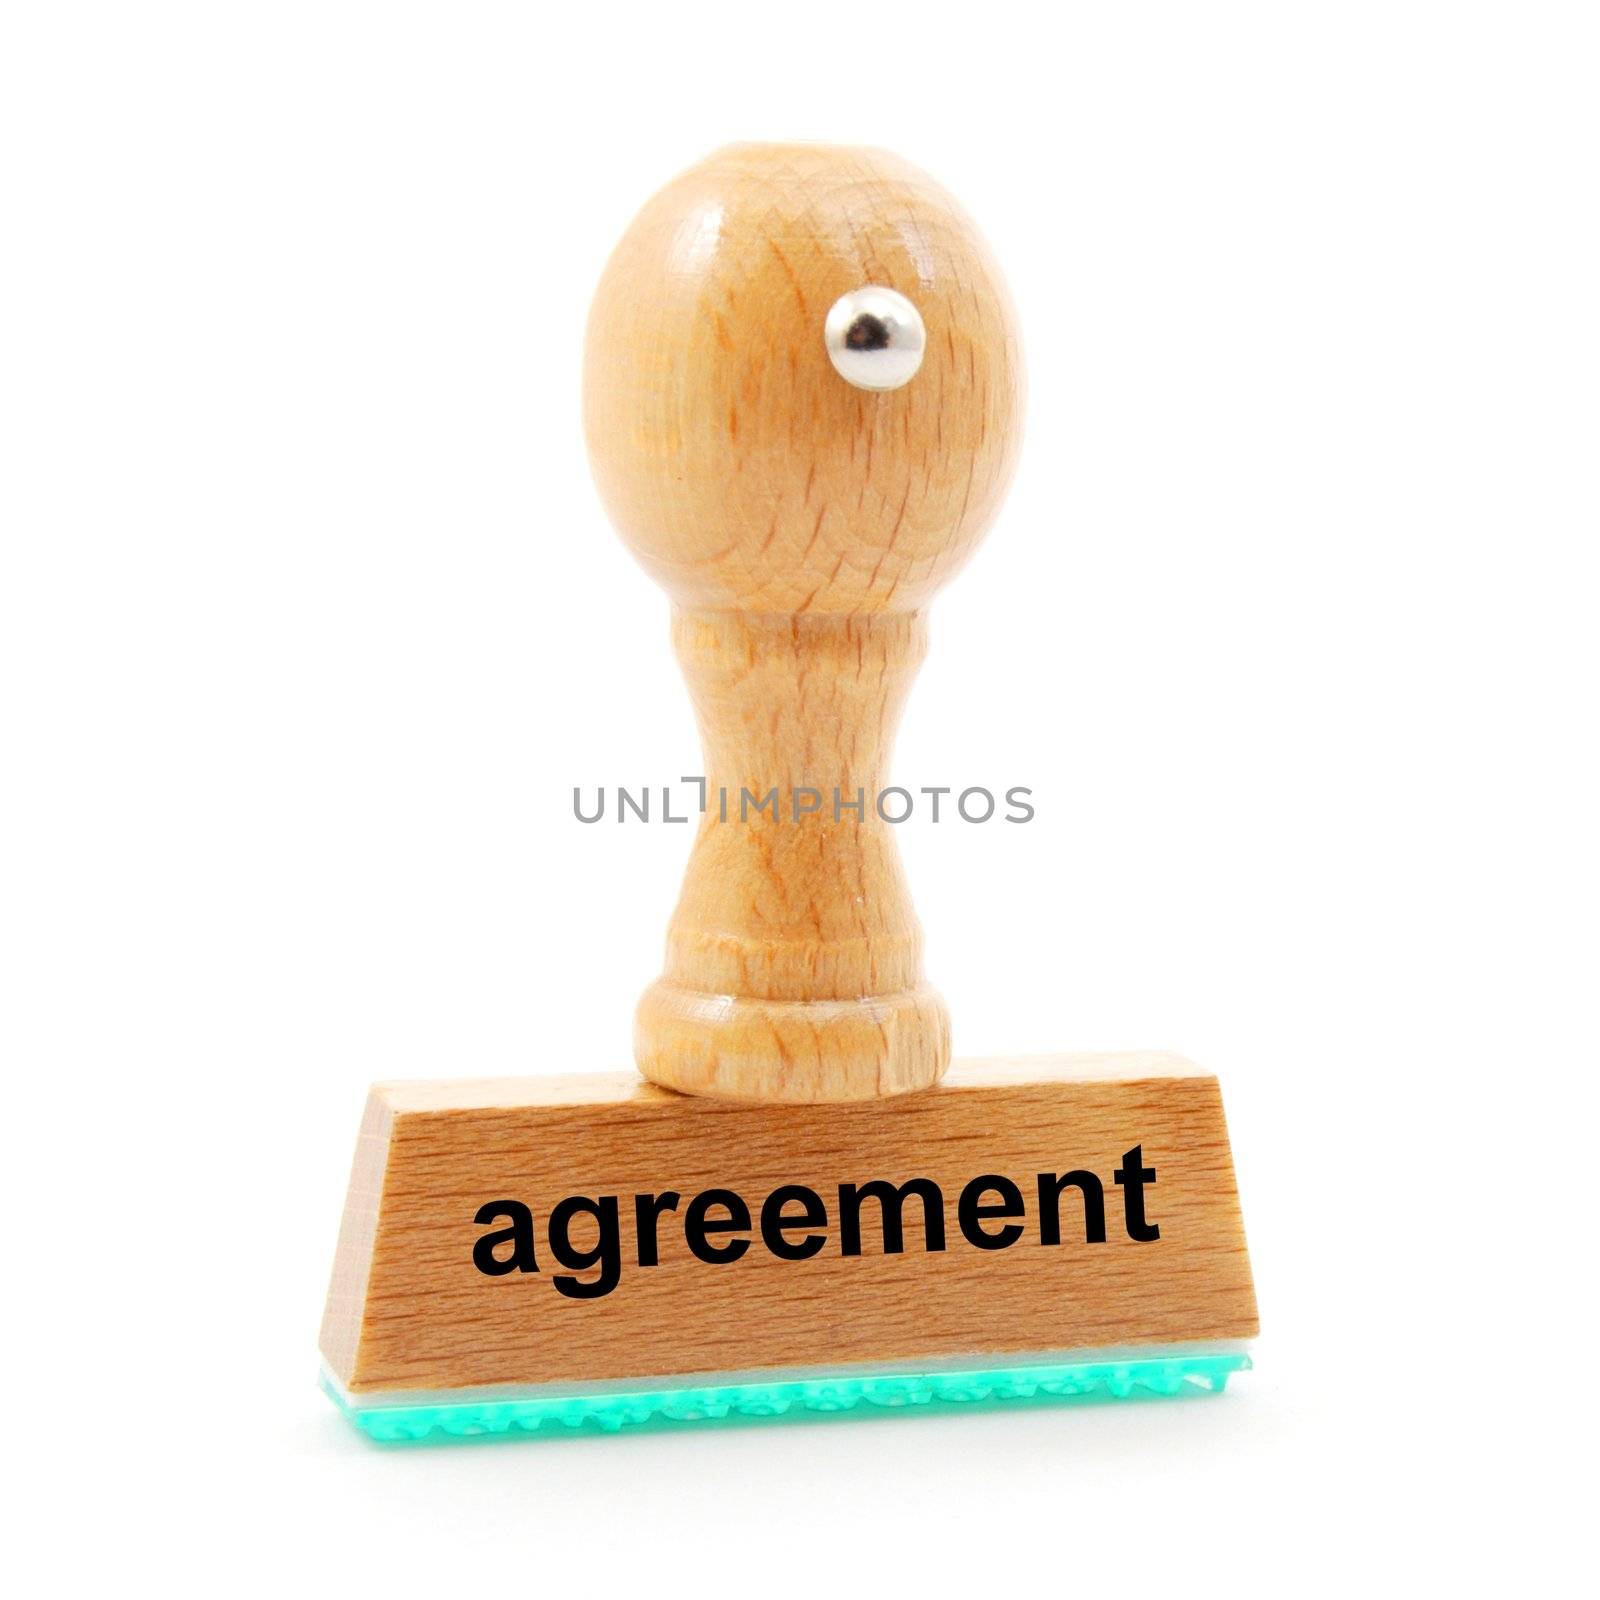 agreement by gunnar3000